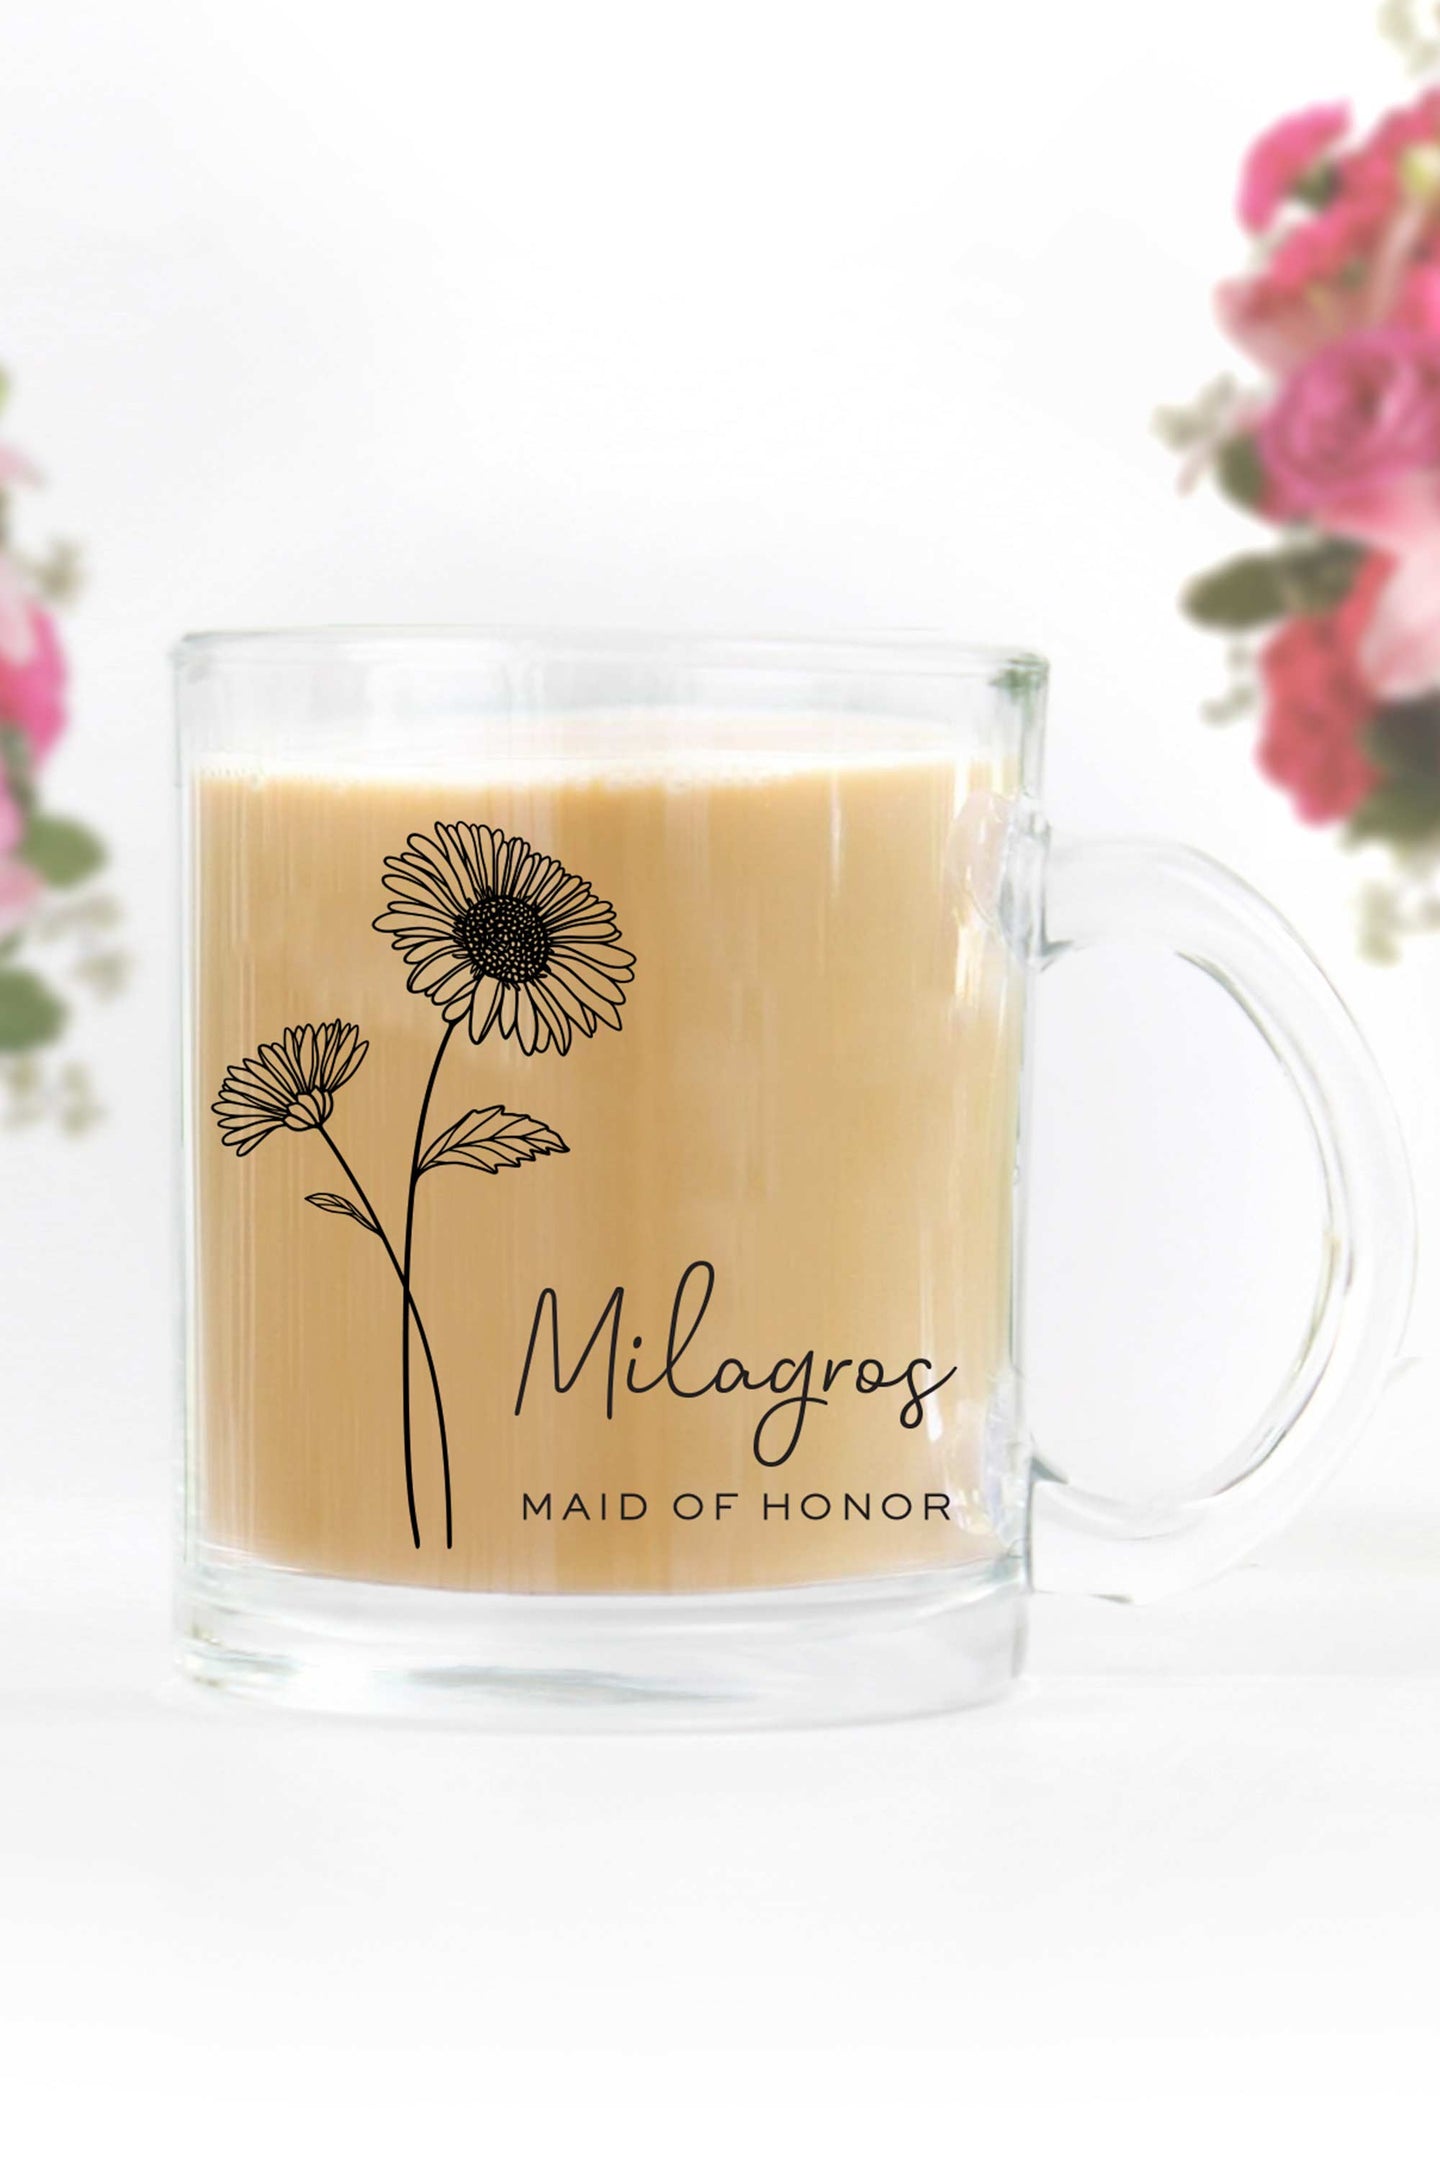 Maid of Honor Birth Flower Mug - Personalized